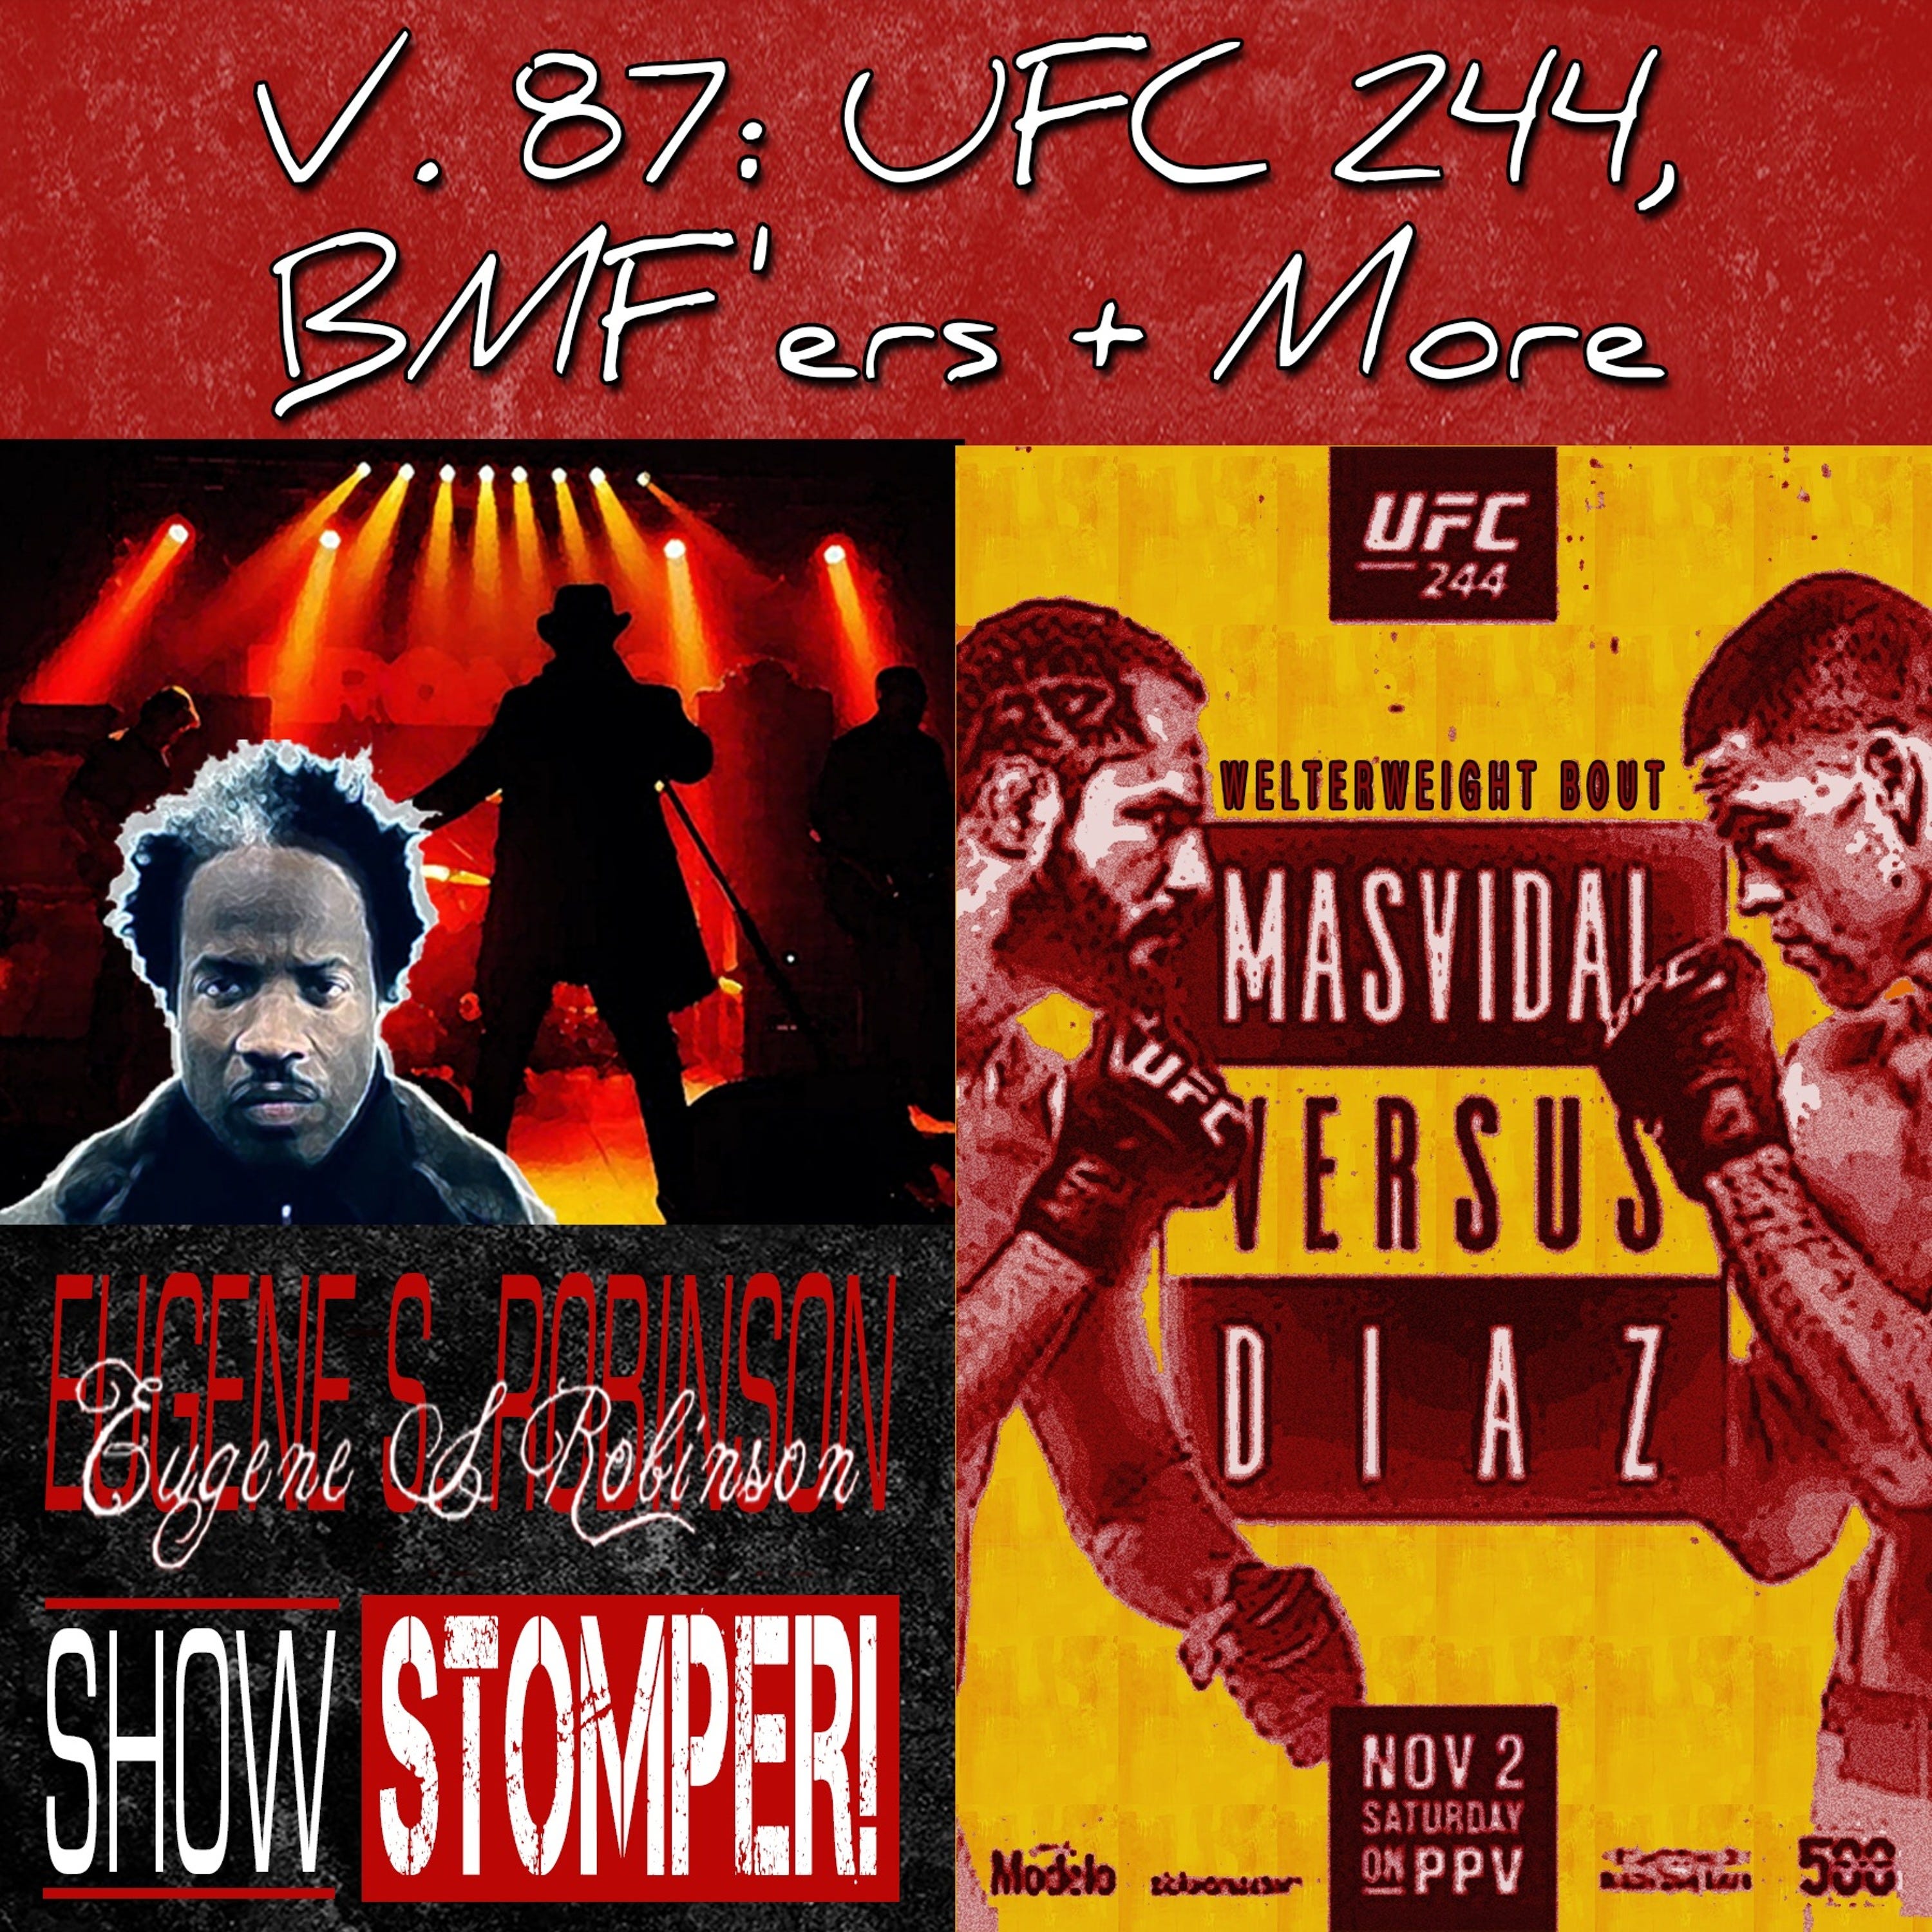 V.87 UFC 244, BMF'ers + More On The Eugene S. Robinson Show Stomper!